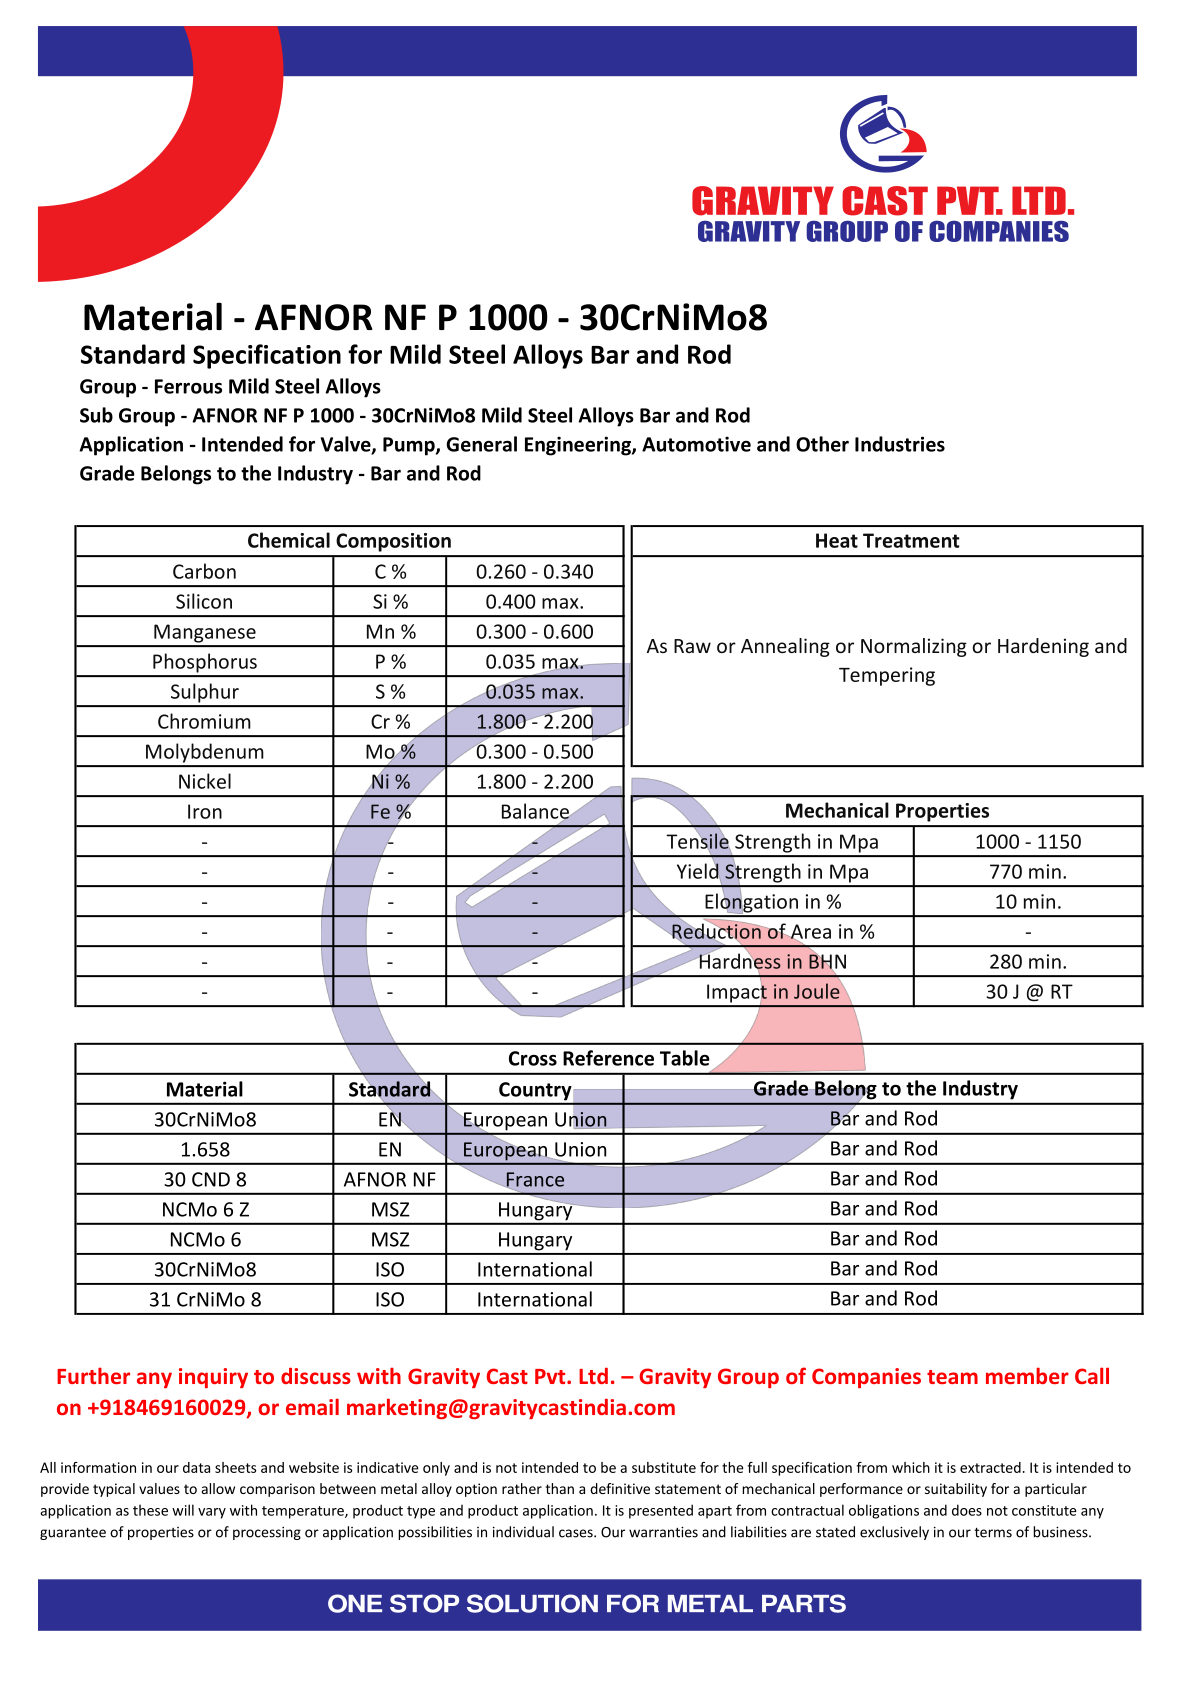 AFNOR NF P 1000 - 30CrNiMo8.pdf